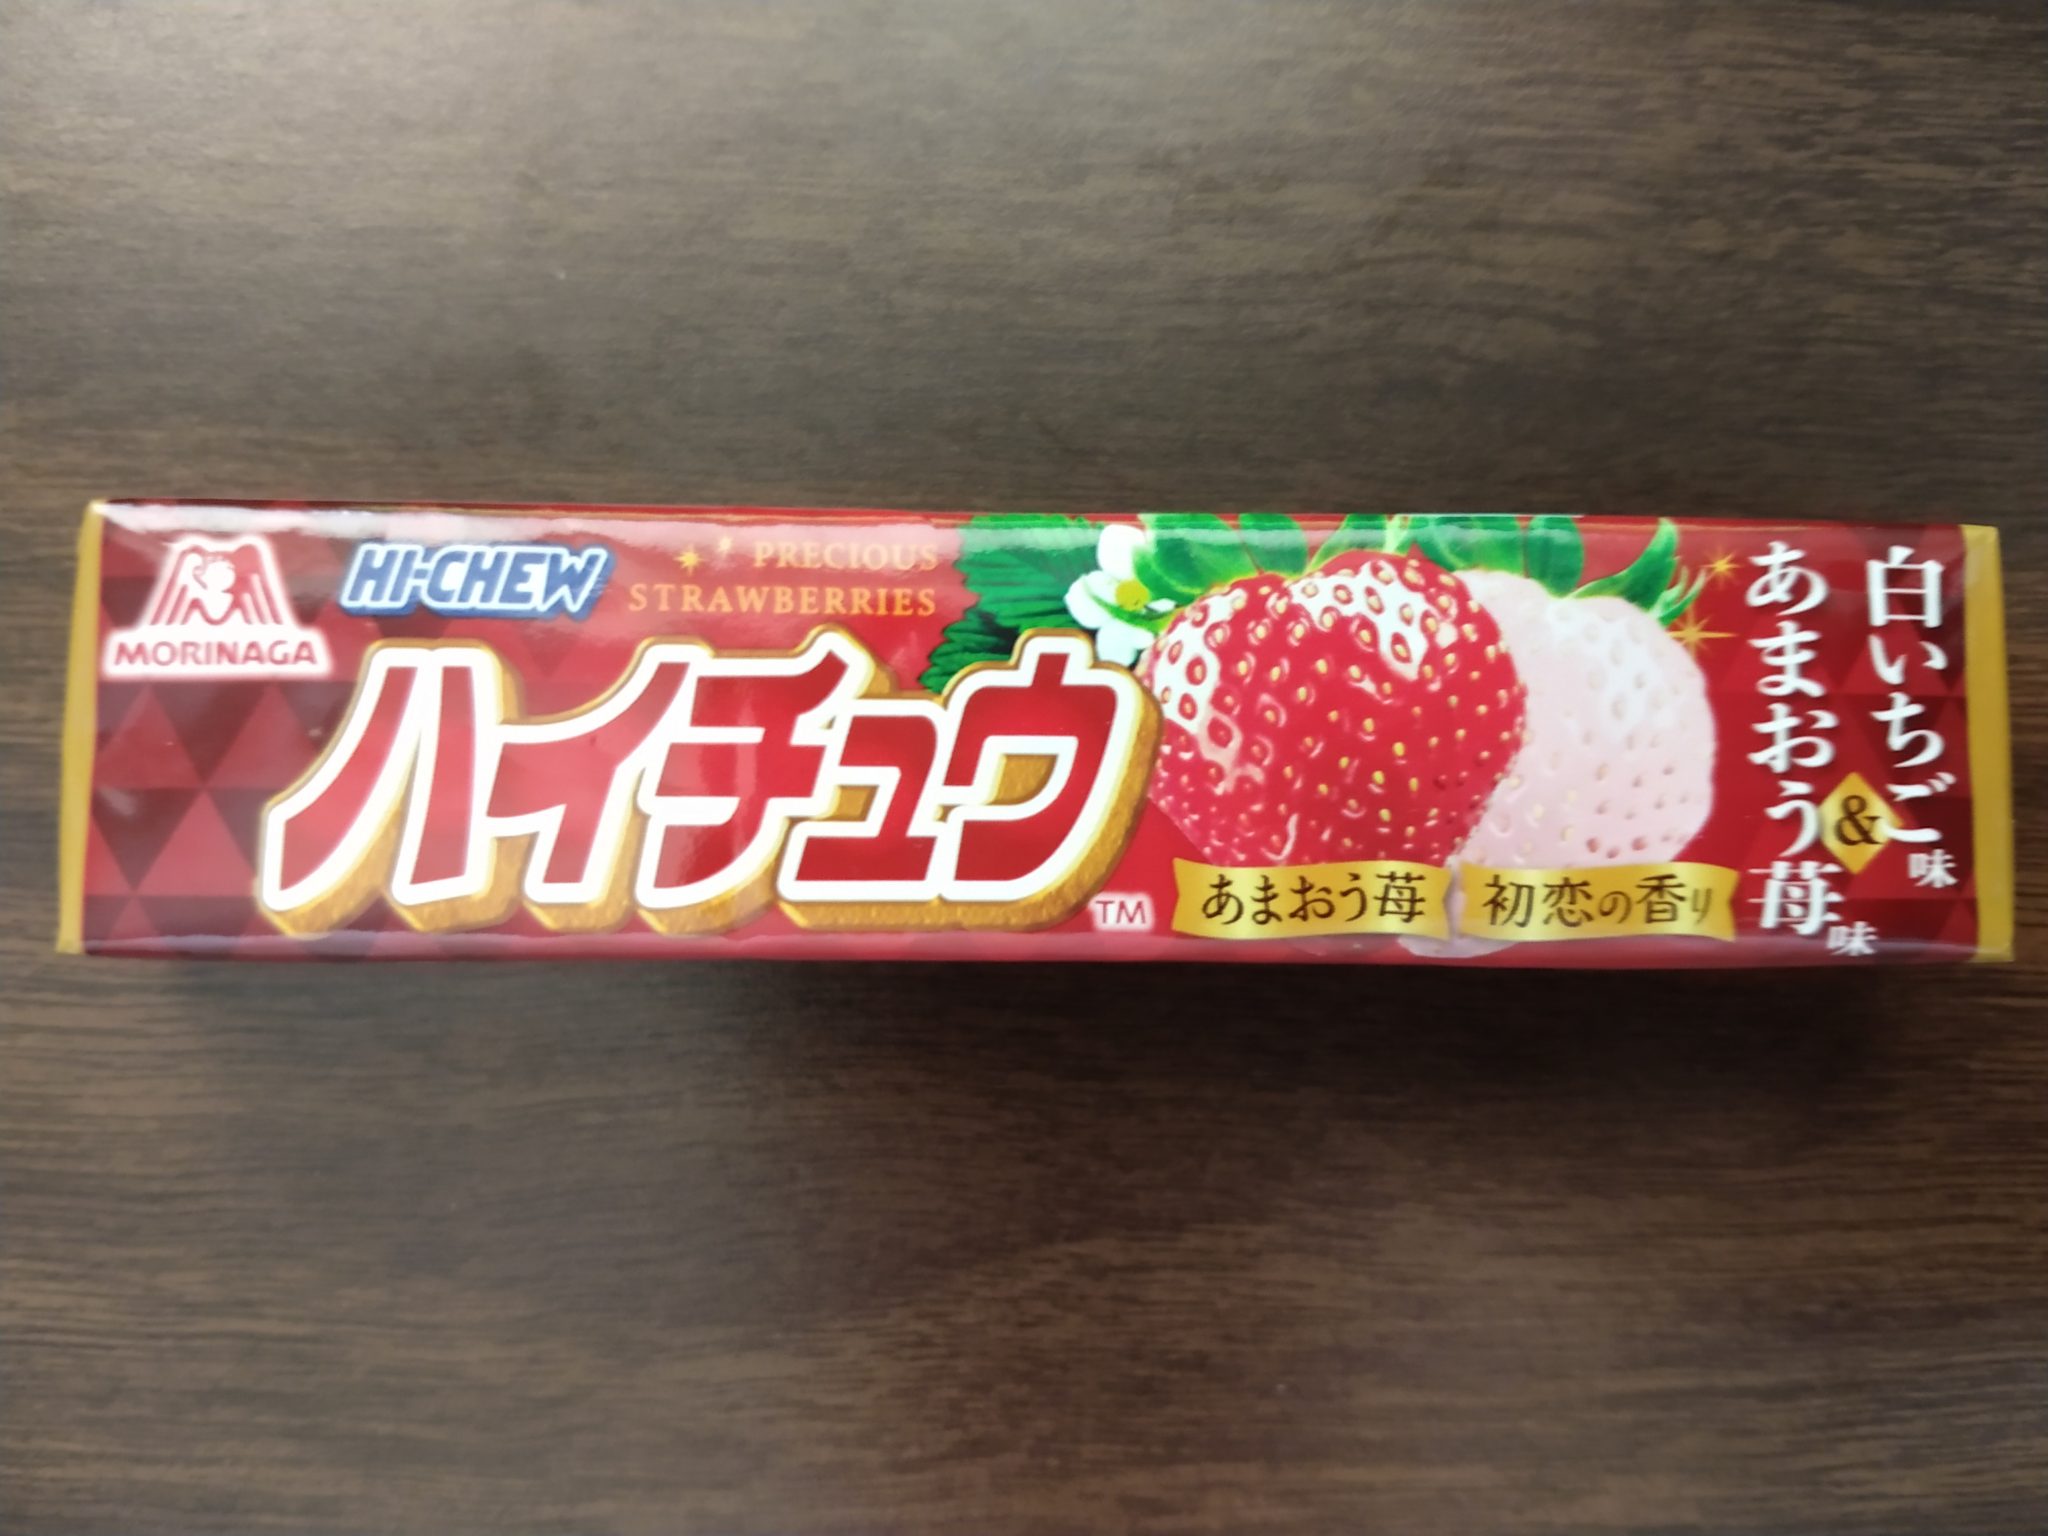 Hi-Chew Doubles – Precious Strawberries